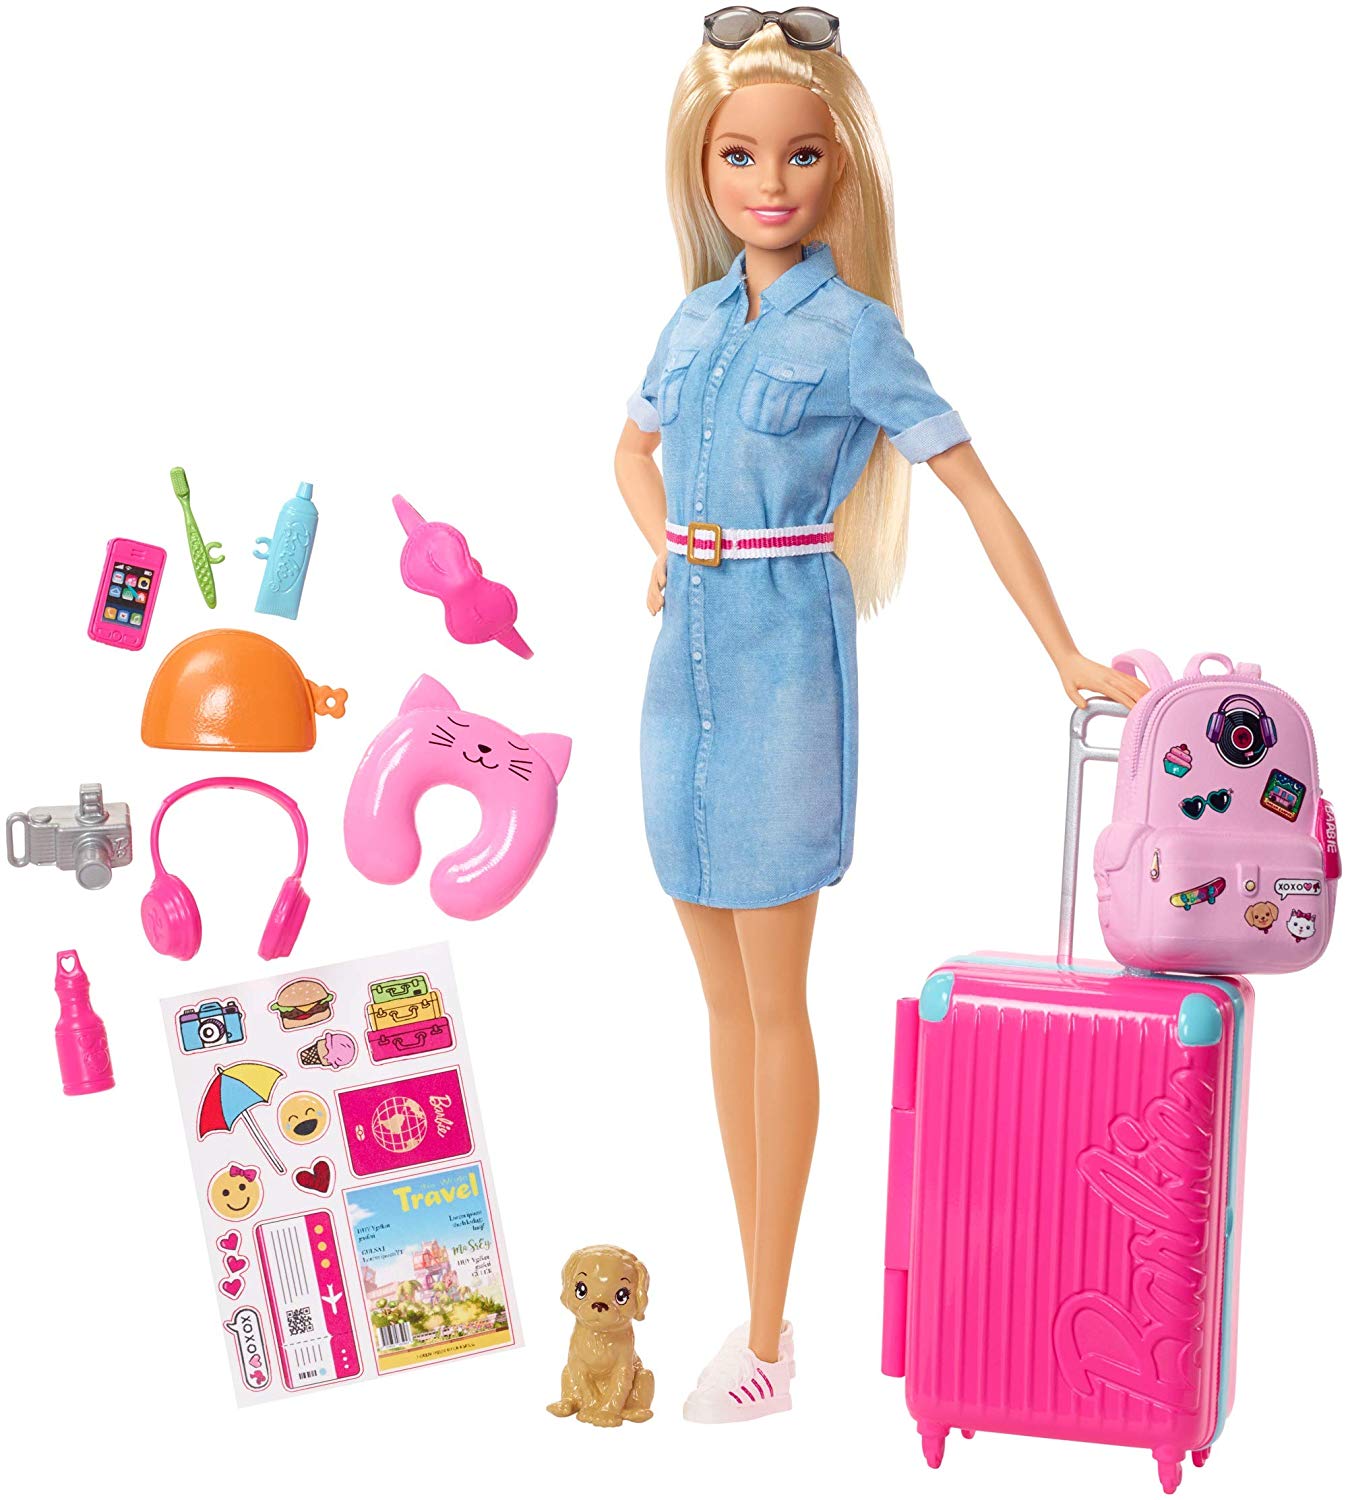 Barbie travel